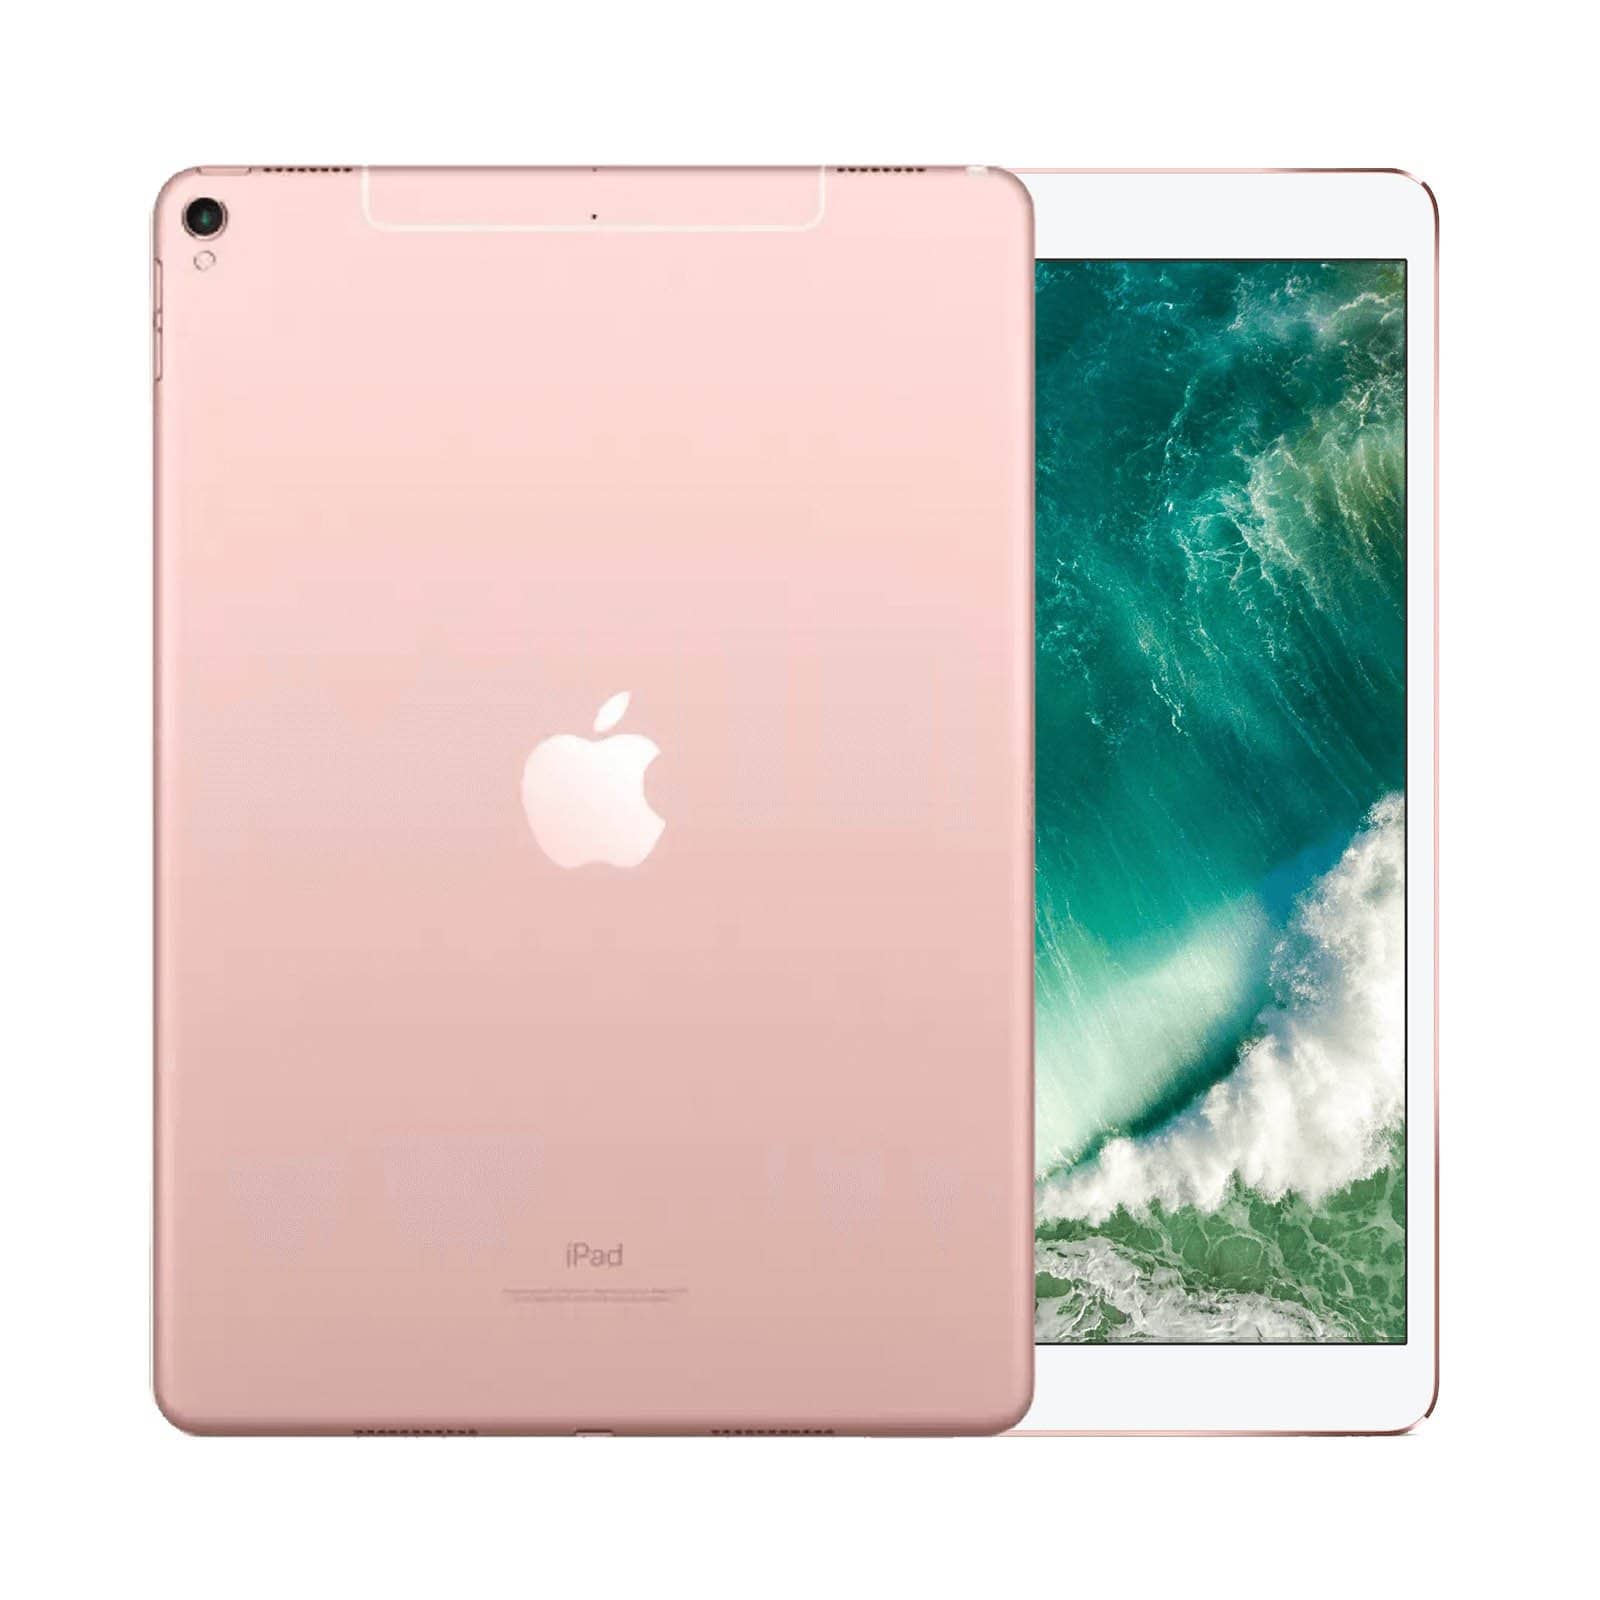 iPad Pro 10.5 Inch 64GB Rose Gold Good - Unlocked 64GB Rose Gold Good